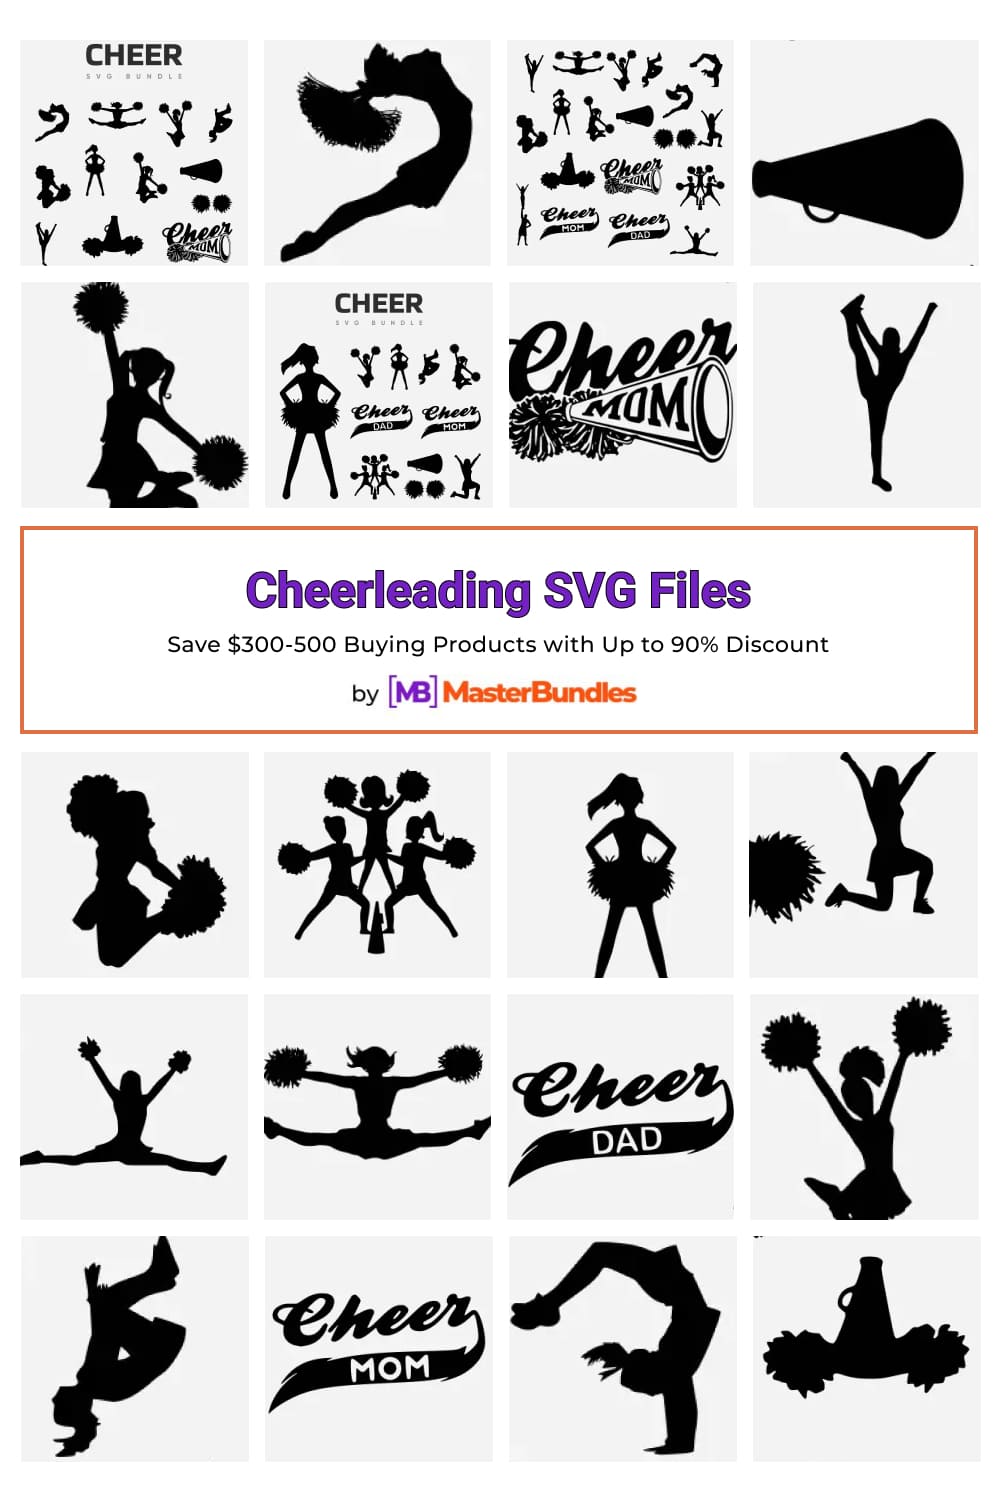 Cheerleading SVG Files Pinterest image.